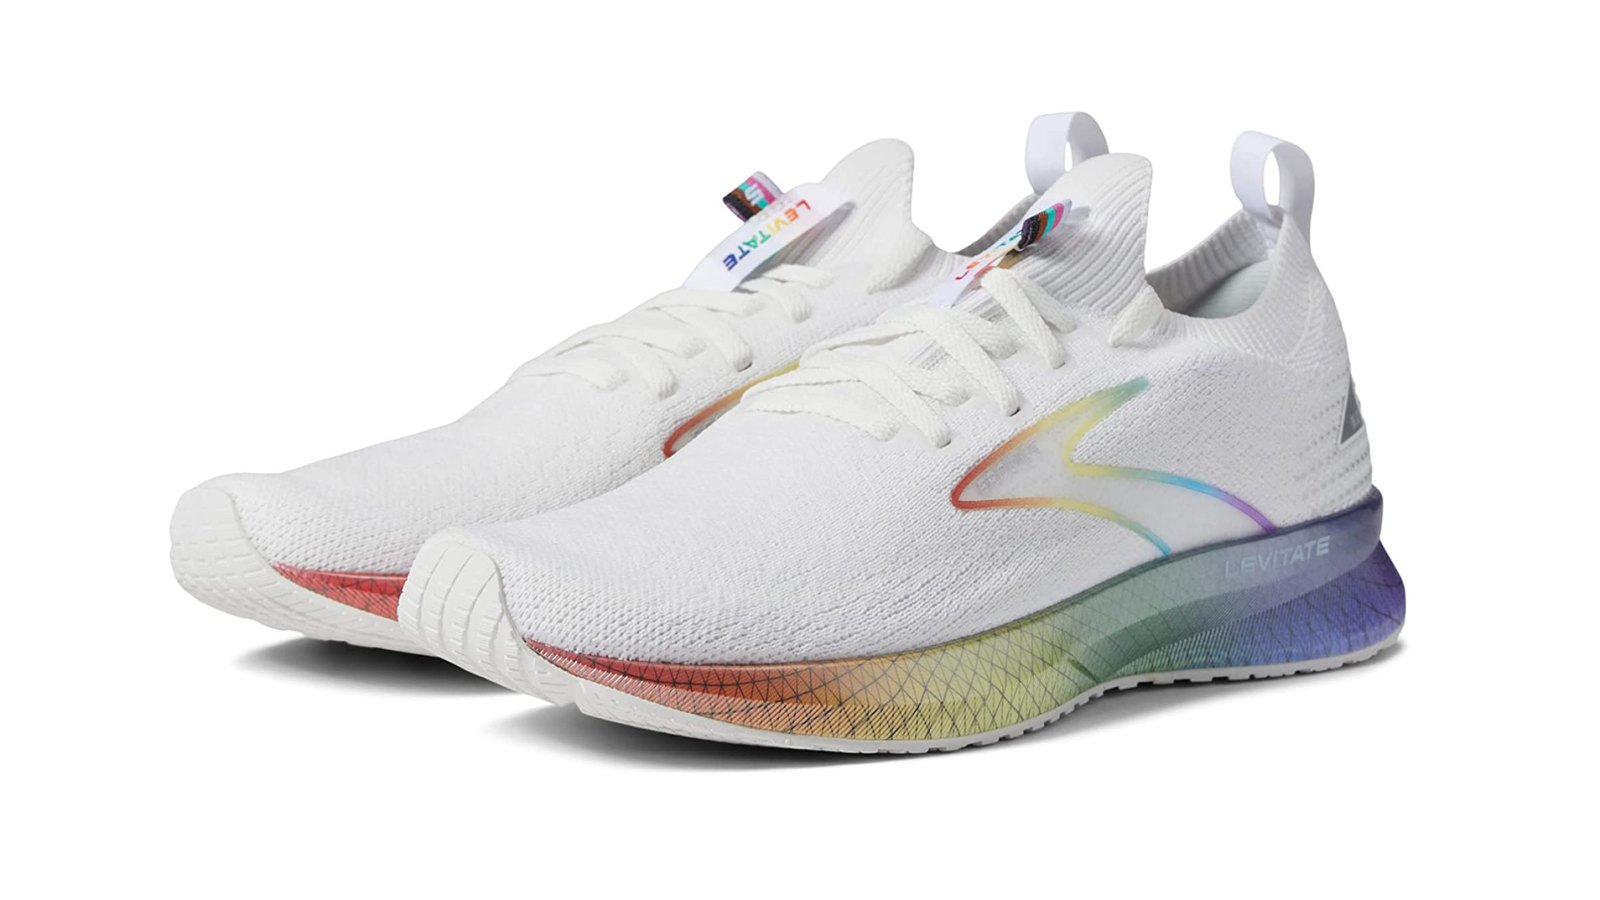 rainbow running shoes